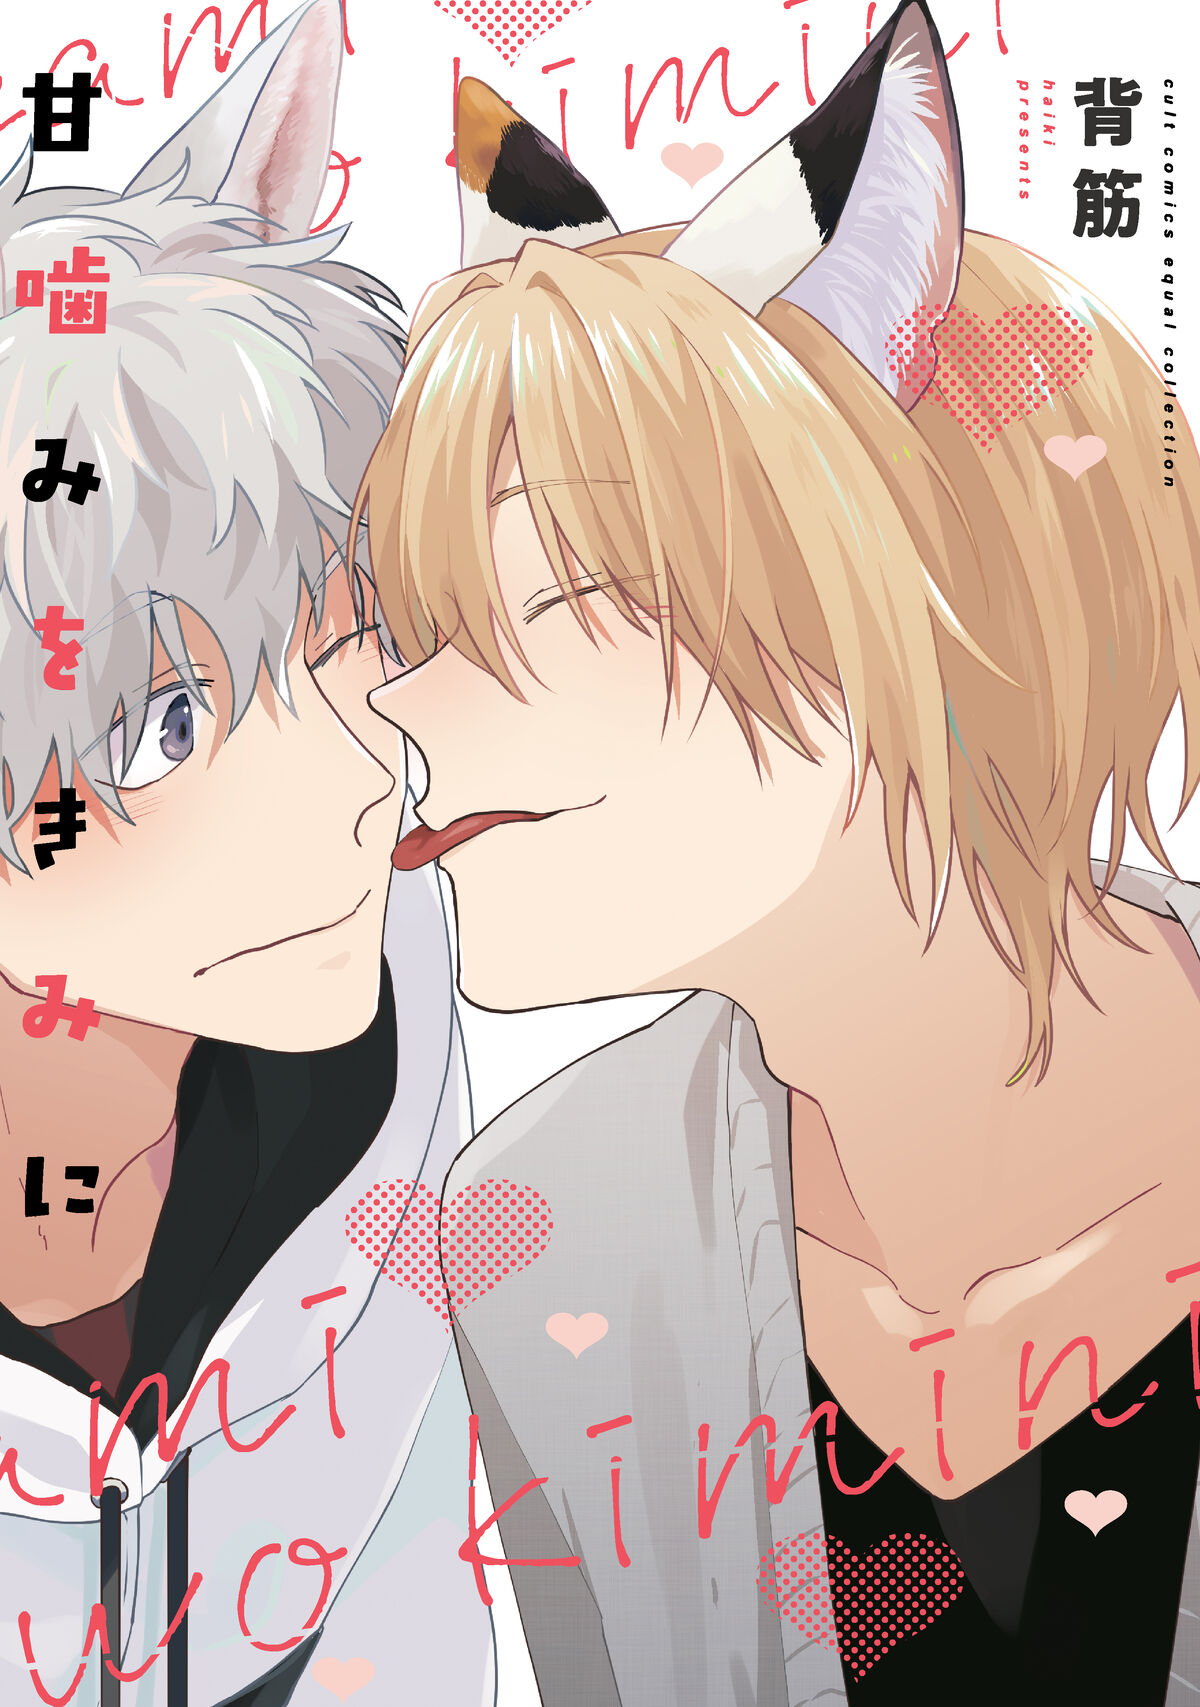 Dakaretai Otoko 1-i ni Odosarete Imasu Boys-Love Anime Posts 1st Promo  Video - News - Anime News Network